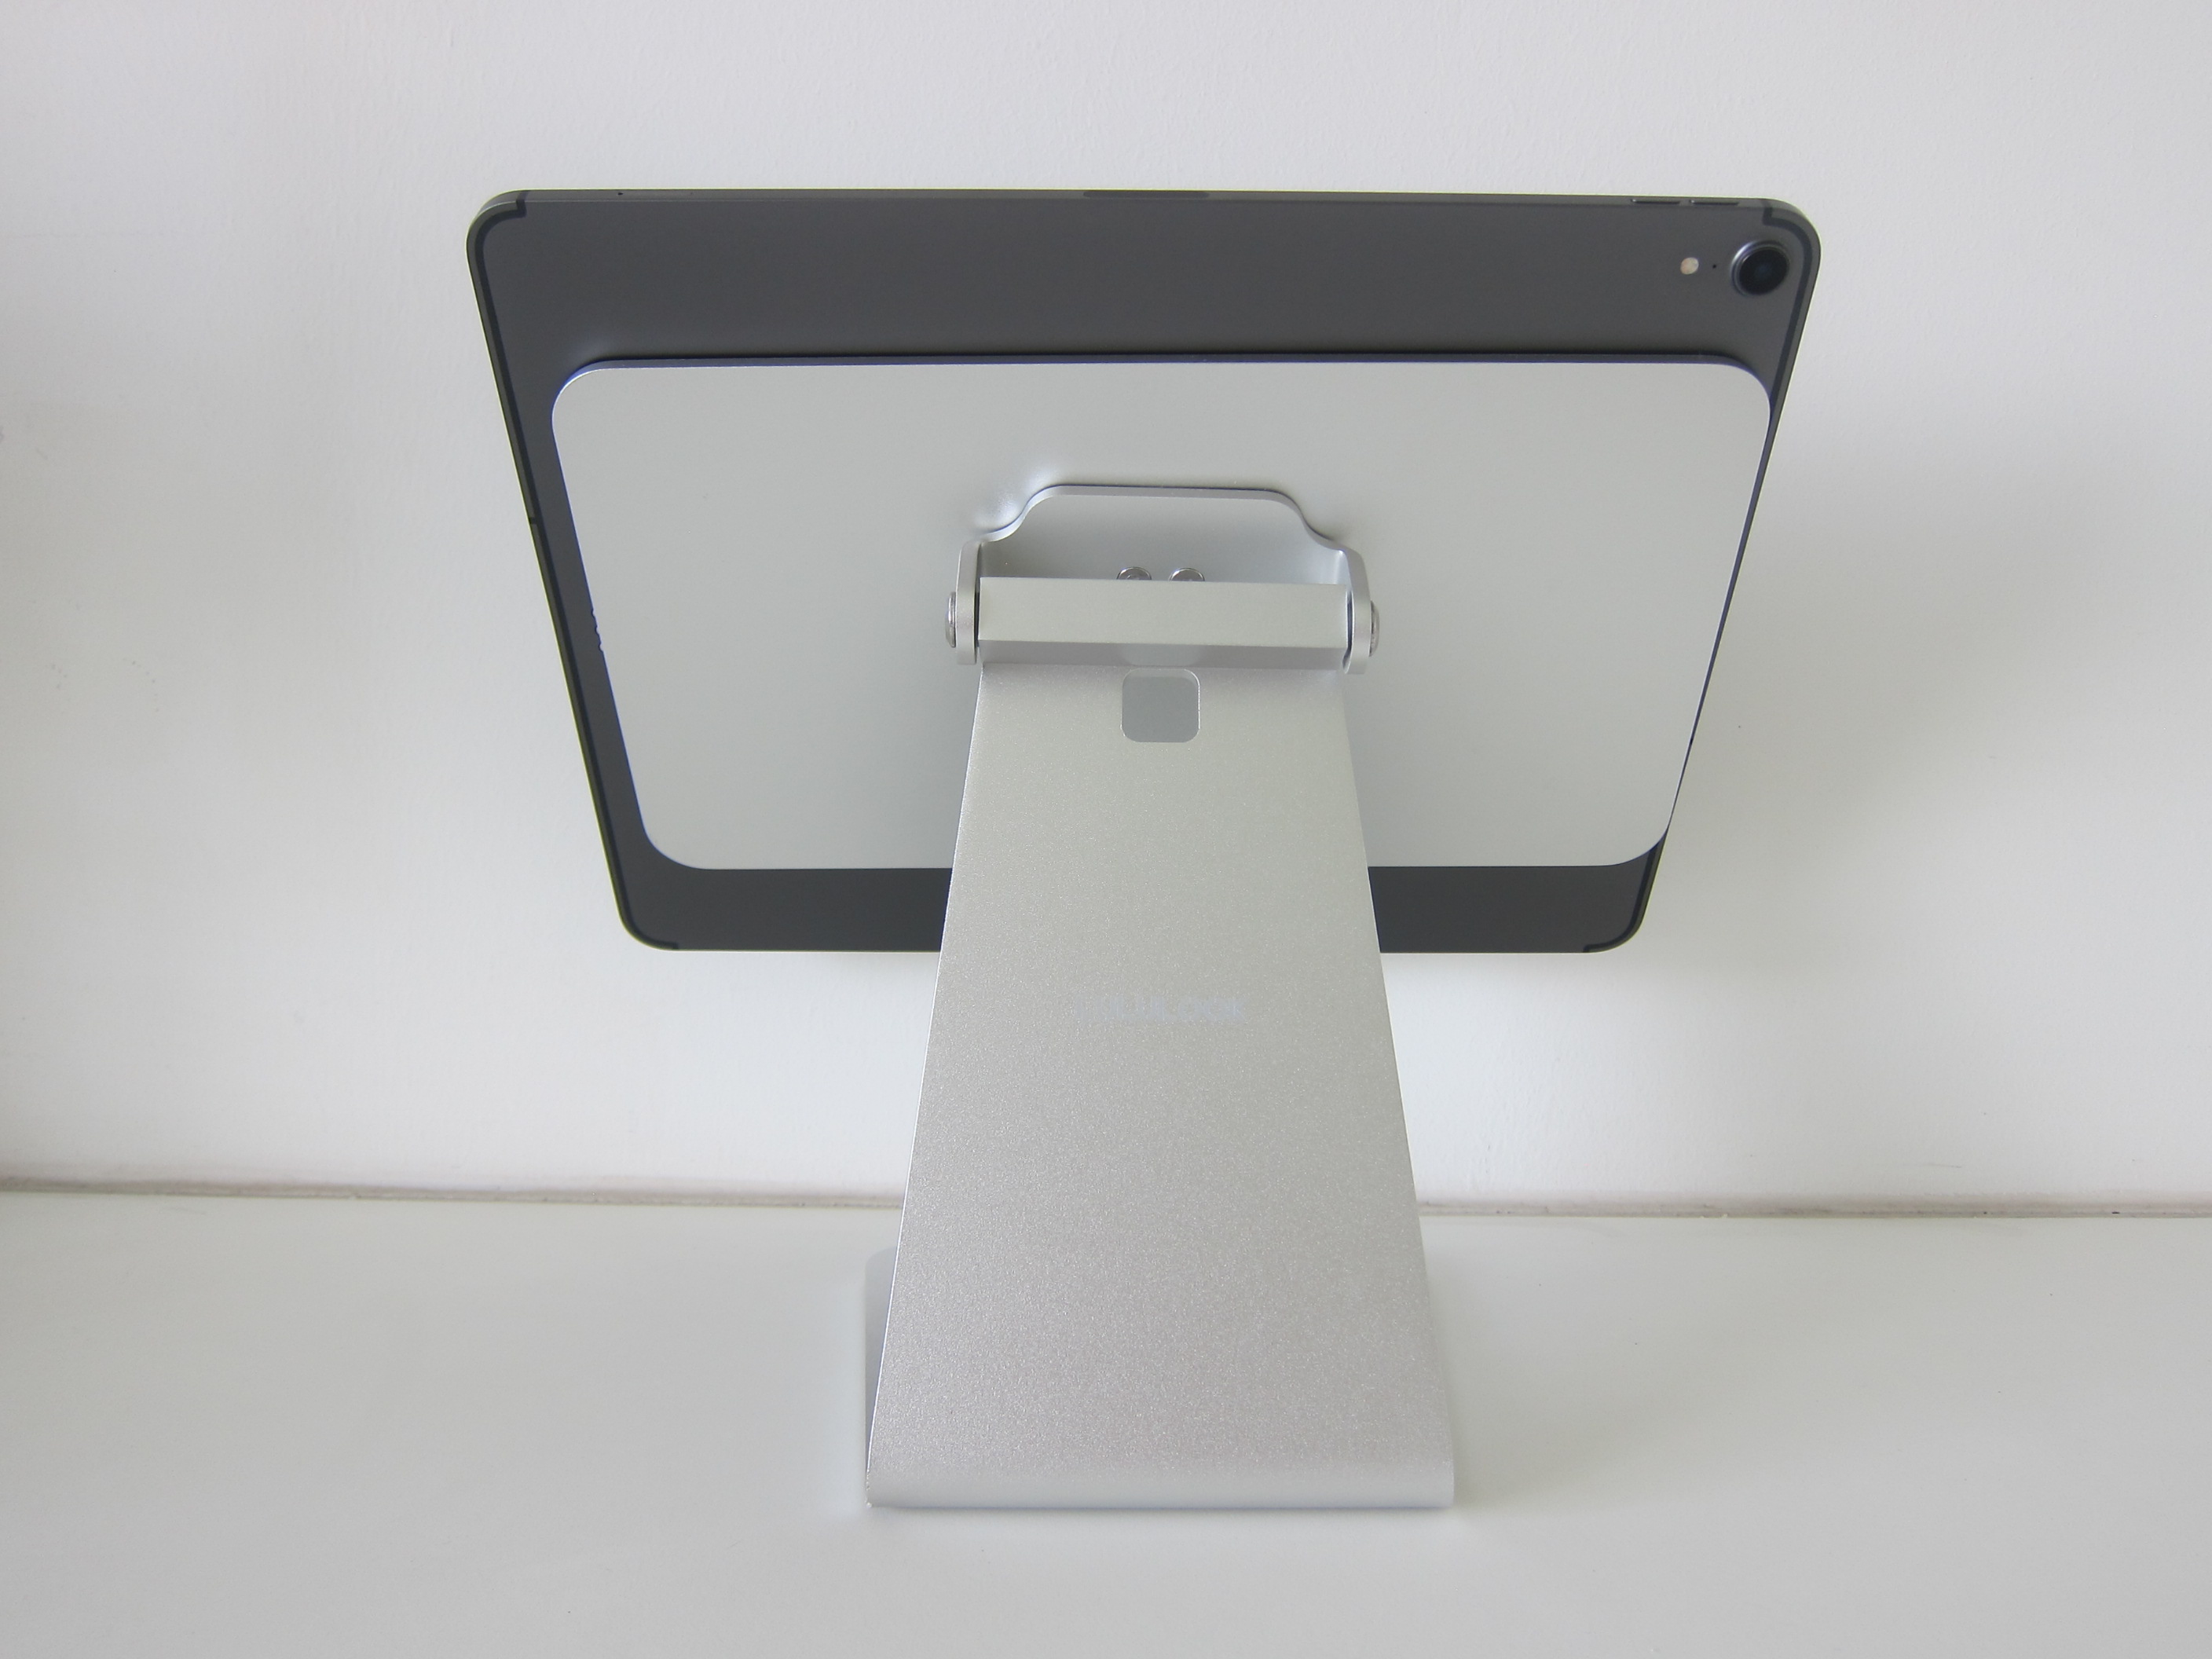 Lululook Magnetic iPad Stand « Blog | lesterchan.net